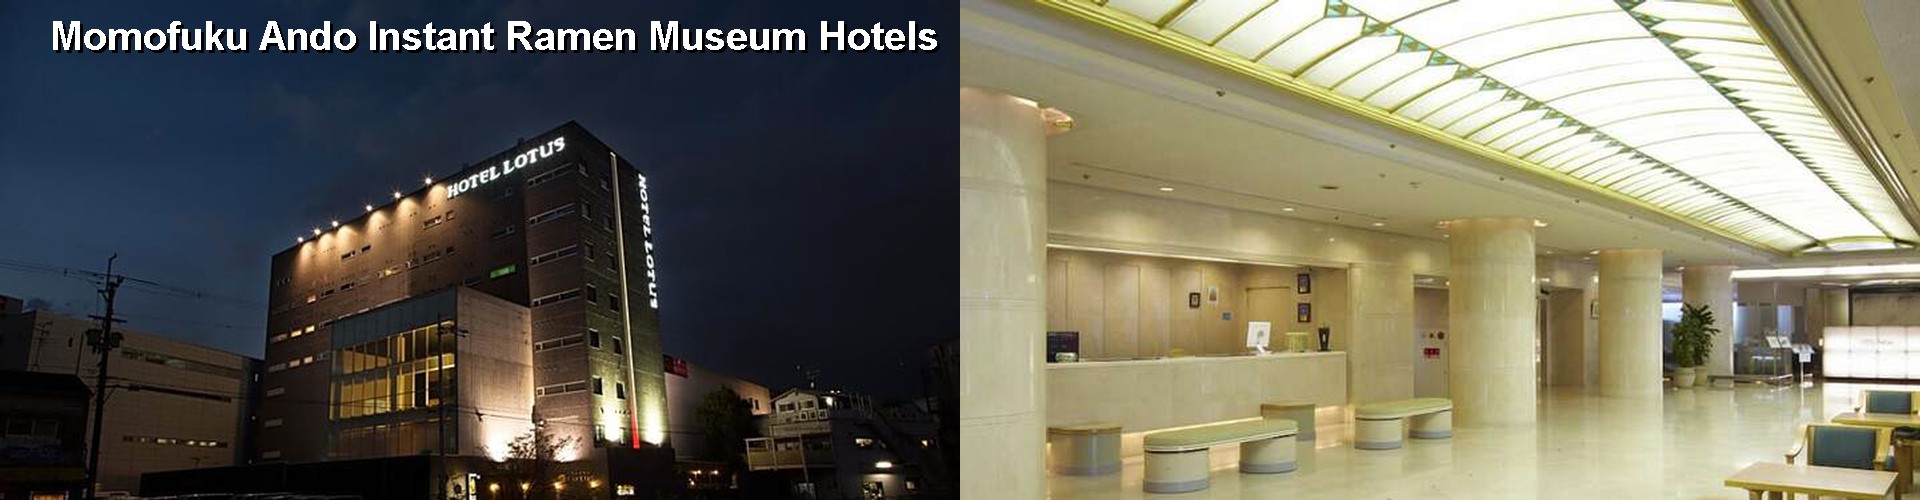 5 Best Hotels near Momofuku Ando Instant Ramen Museum